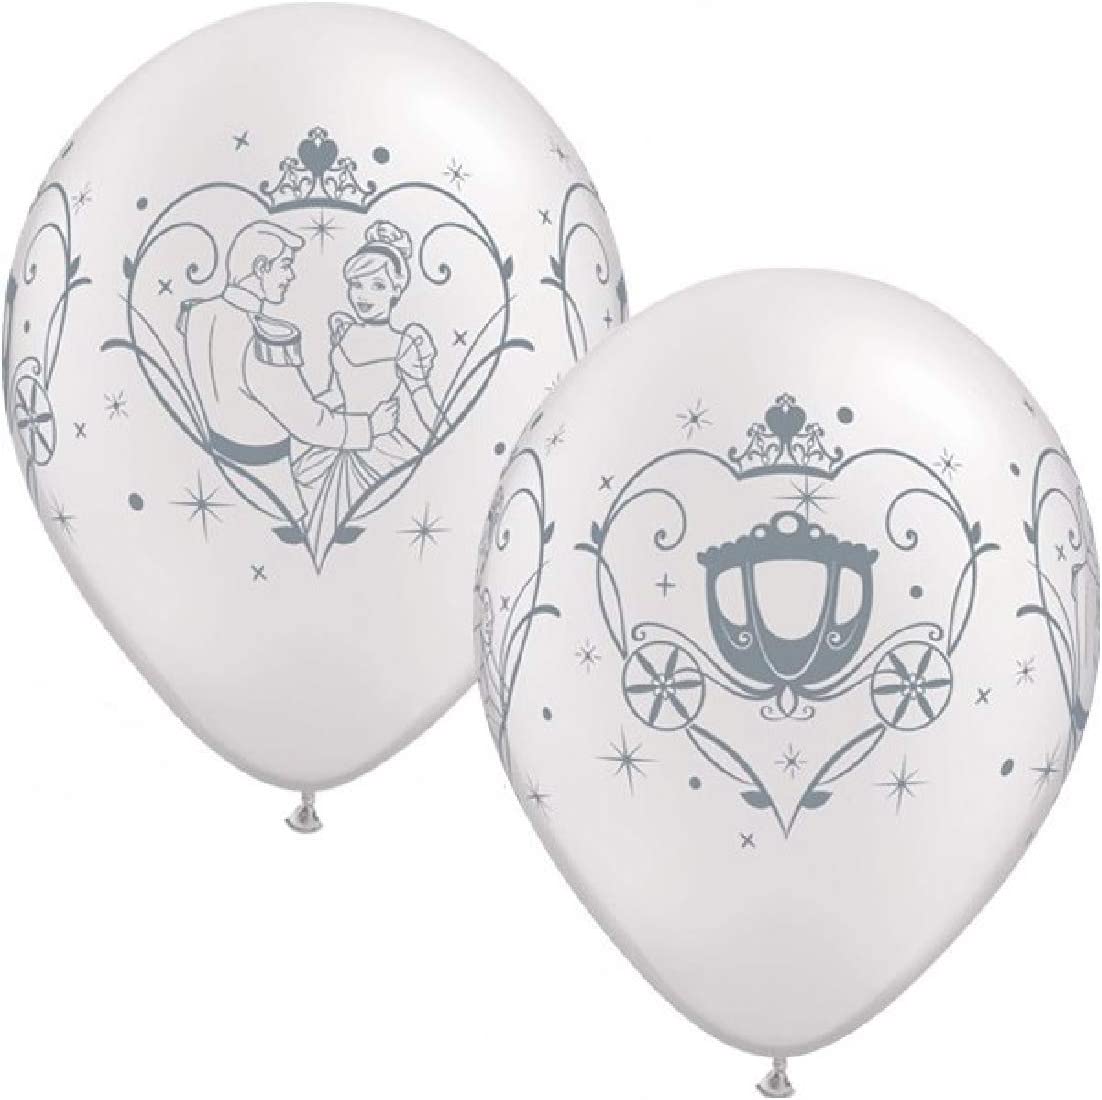 Cinderella & Prince Charming Print Latex Balloon